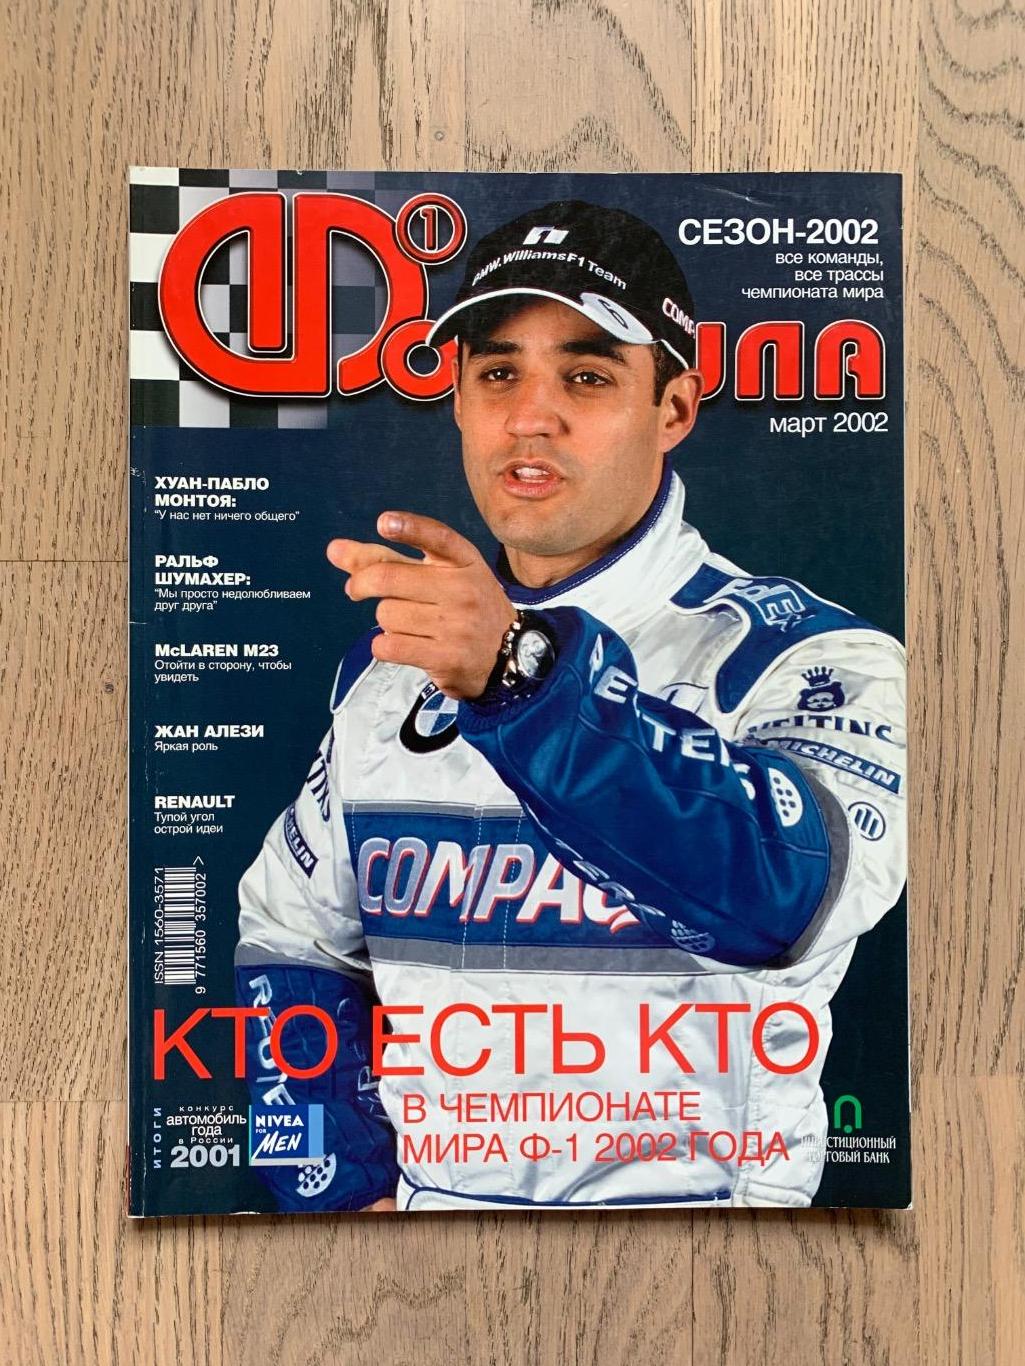 Журнал Формула 1 (Formula Magazine) / март 2002